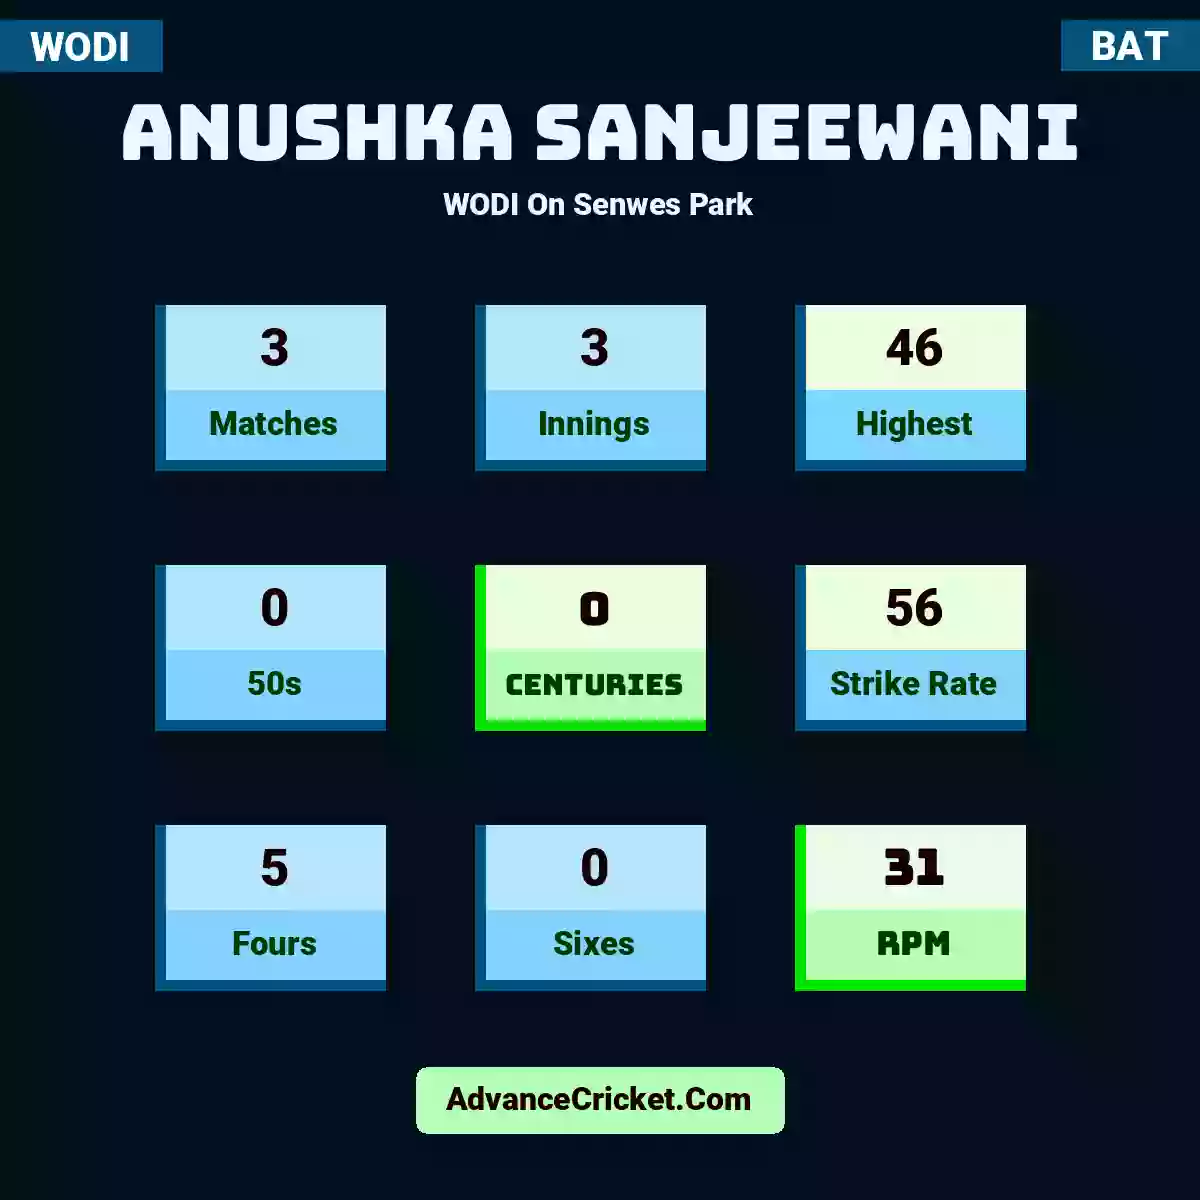 Anushka Sanjeewani WODI  On Senwes Park, Anushka Sanjeewani played 3 matches, scored 46 runs as highest, 0 half-centuries, and 0 centuries, with a strike rate of 56. A.Sanjeewani hit 5 fours and 0 sixes, with an RPM of 31.